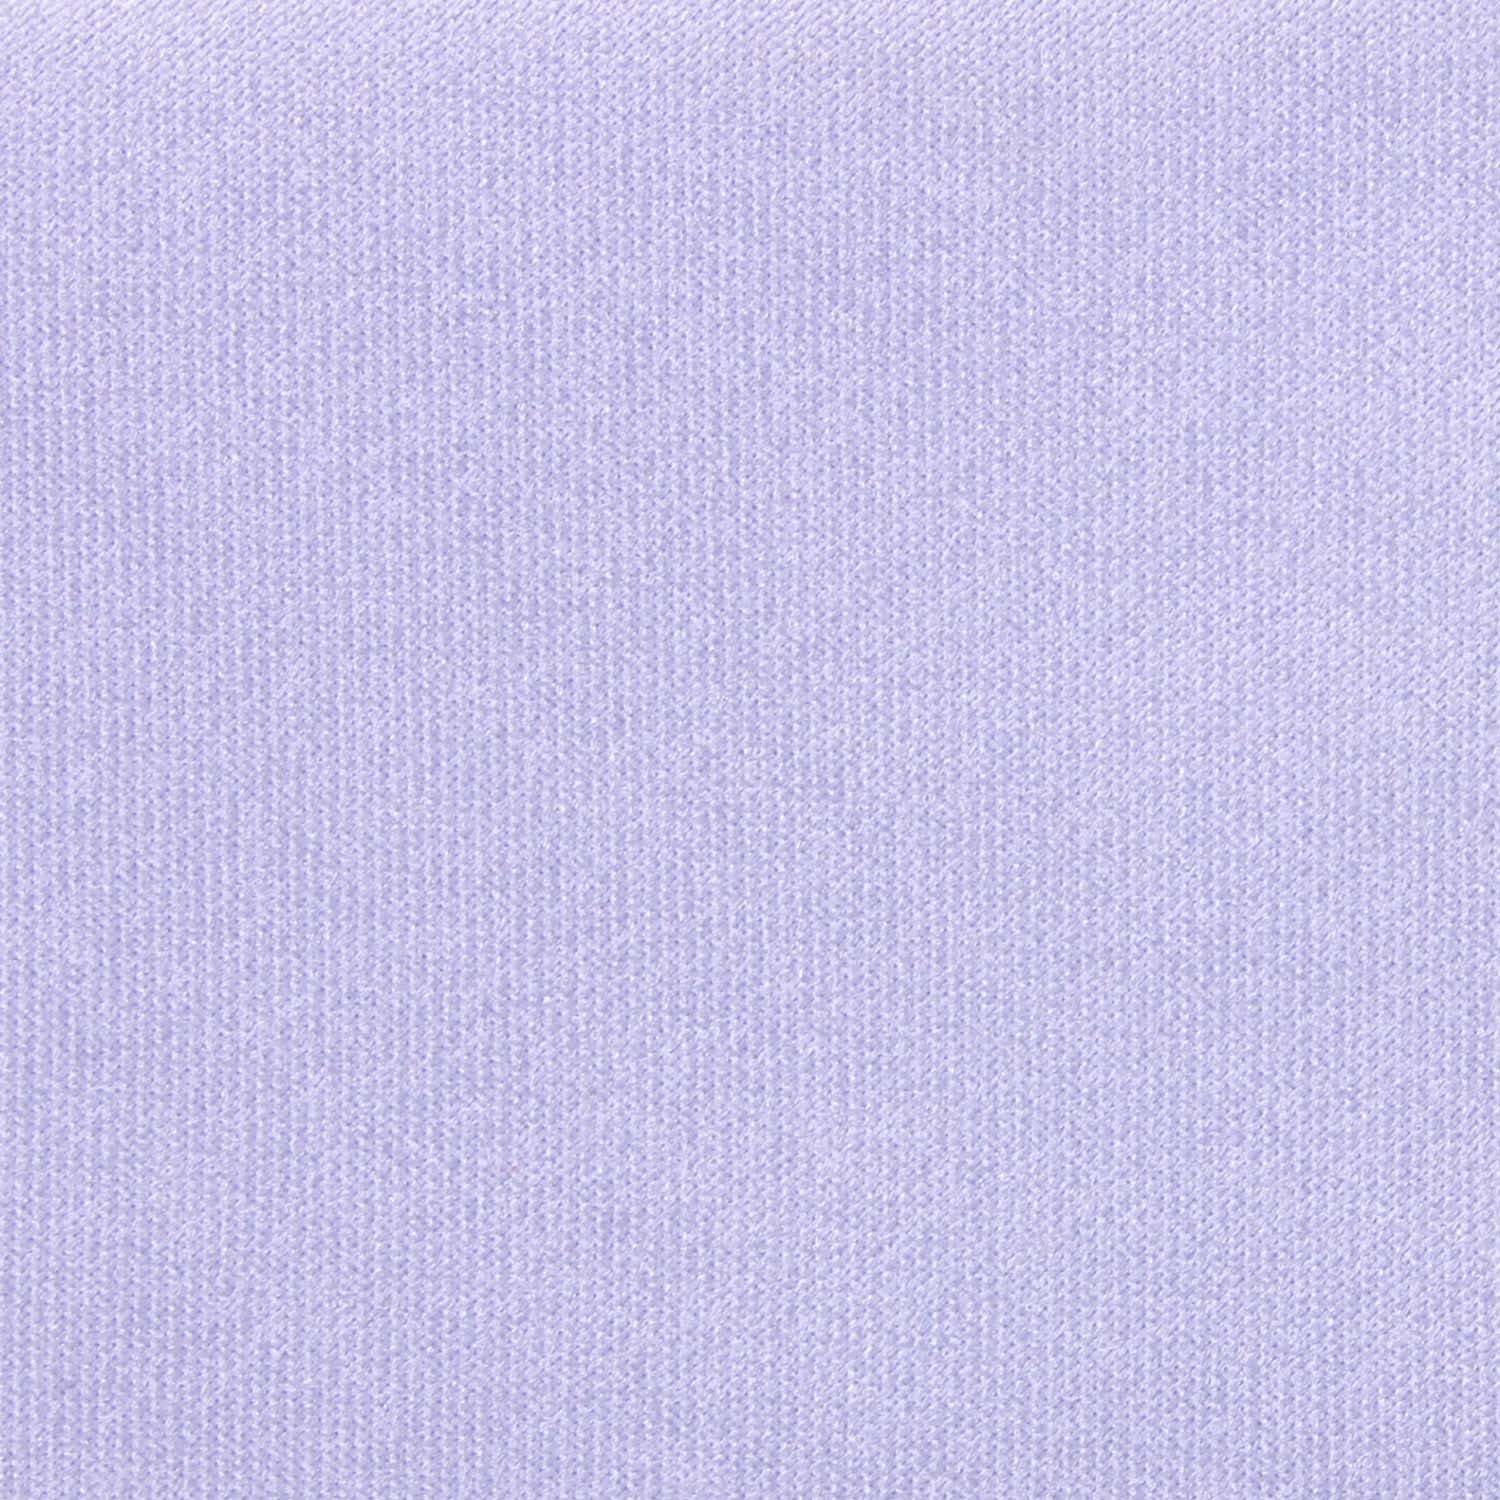 Lavender Purple Satin Fabric Skinny Tie M147